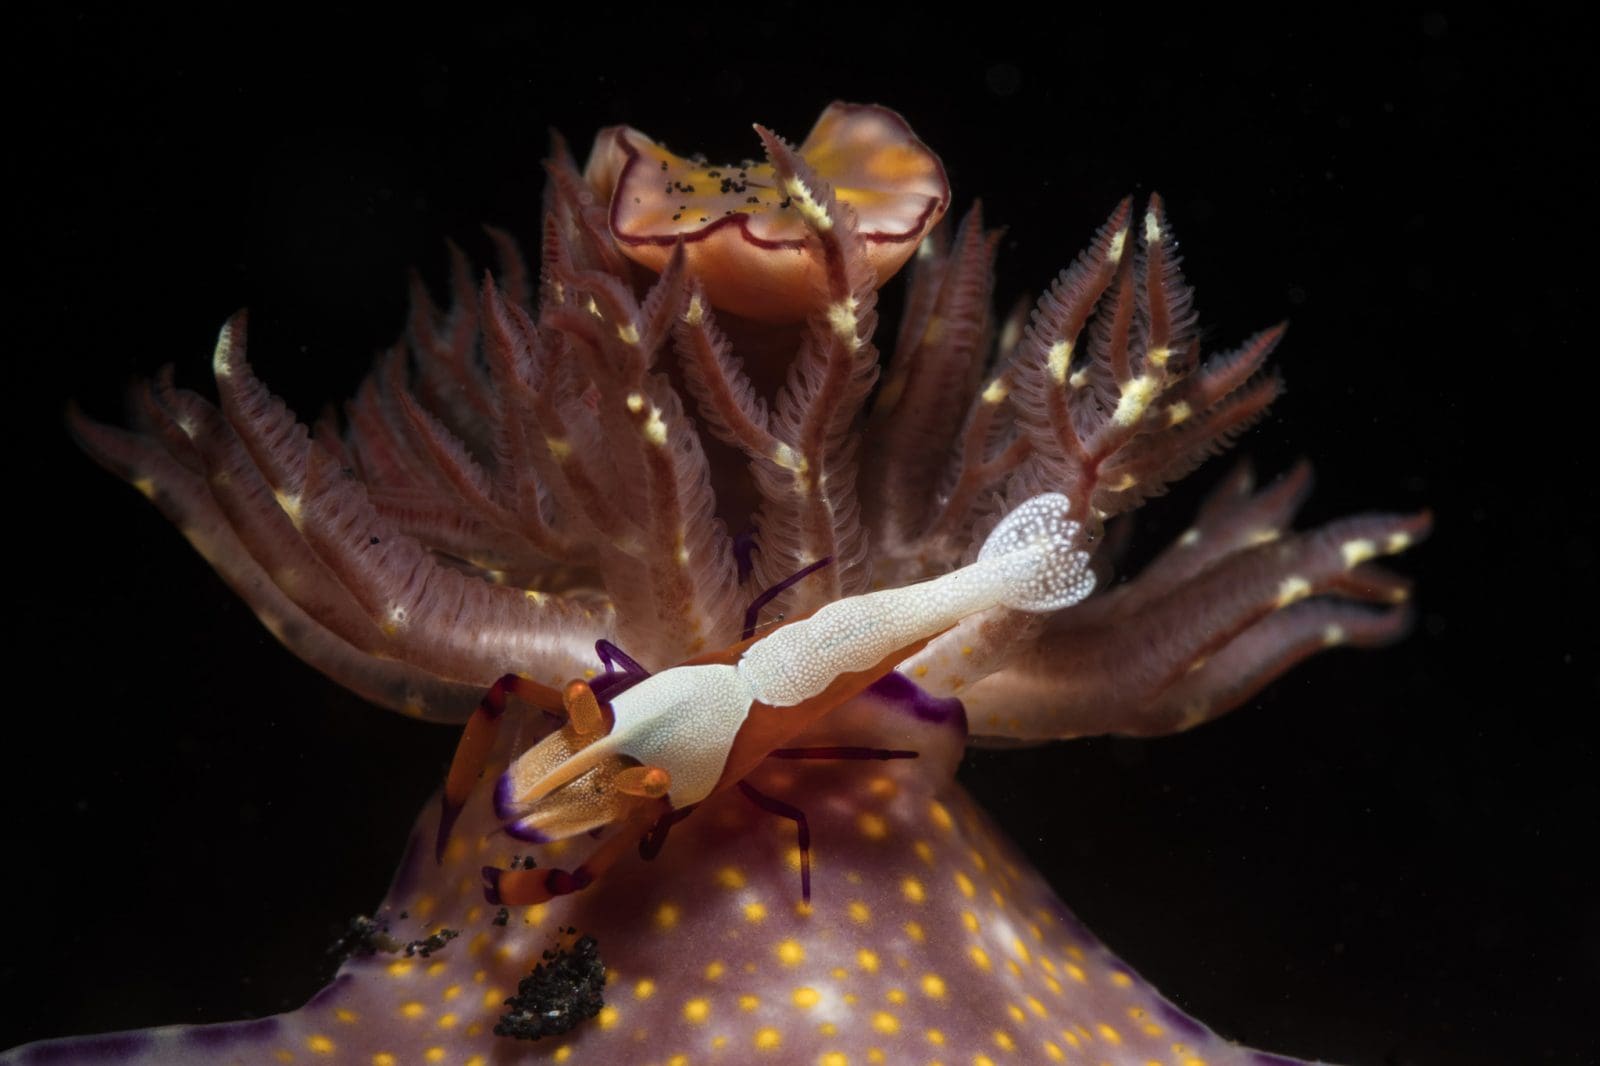 Emperor shrimp on ceratosoma trilobatum nudibranch